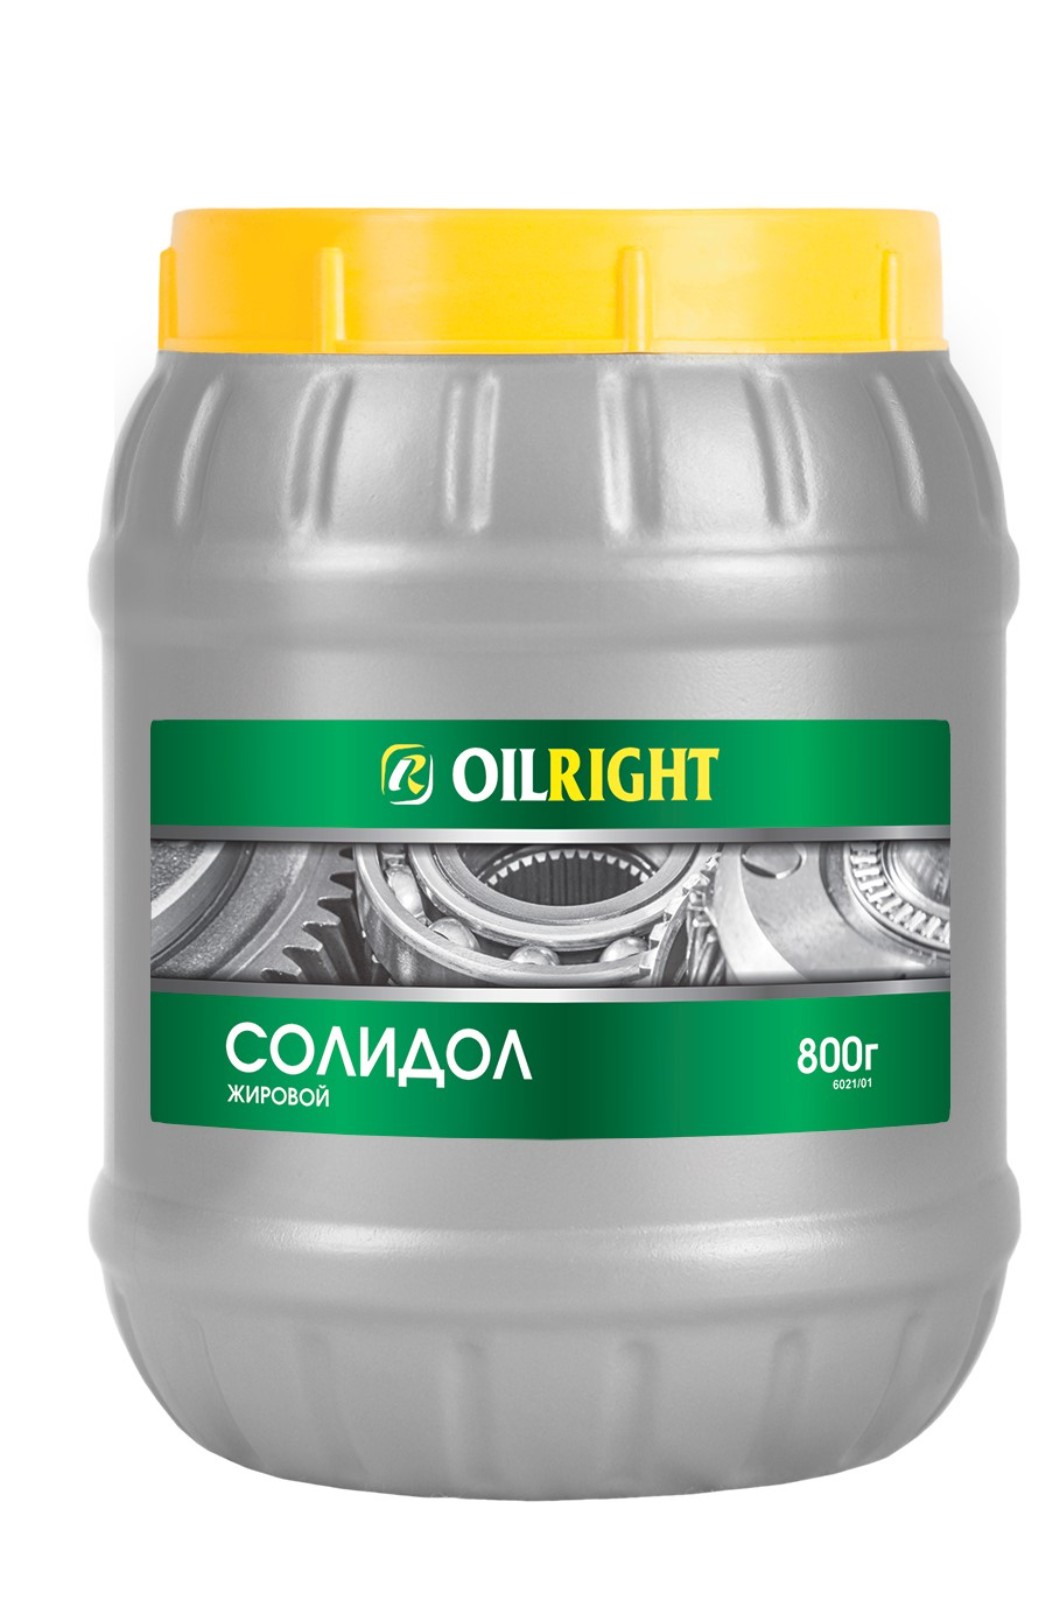 Смазка OILRIGHT Солидол жировой 800г смазка oilright солидол жировой 9 5кг